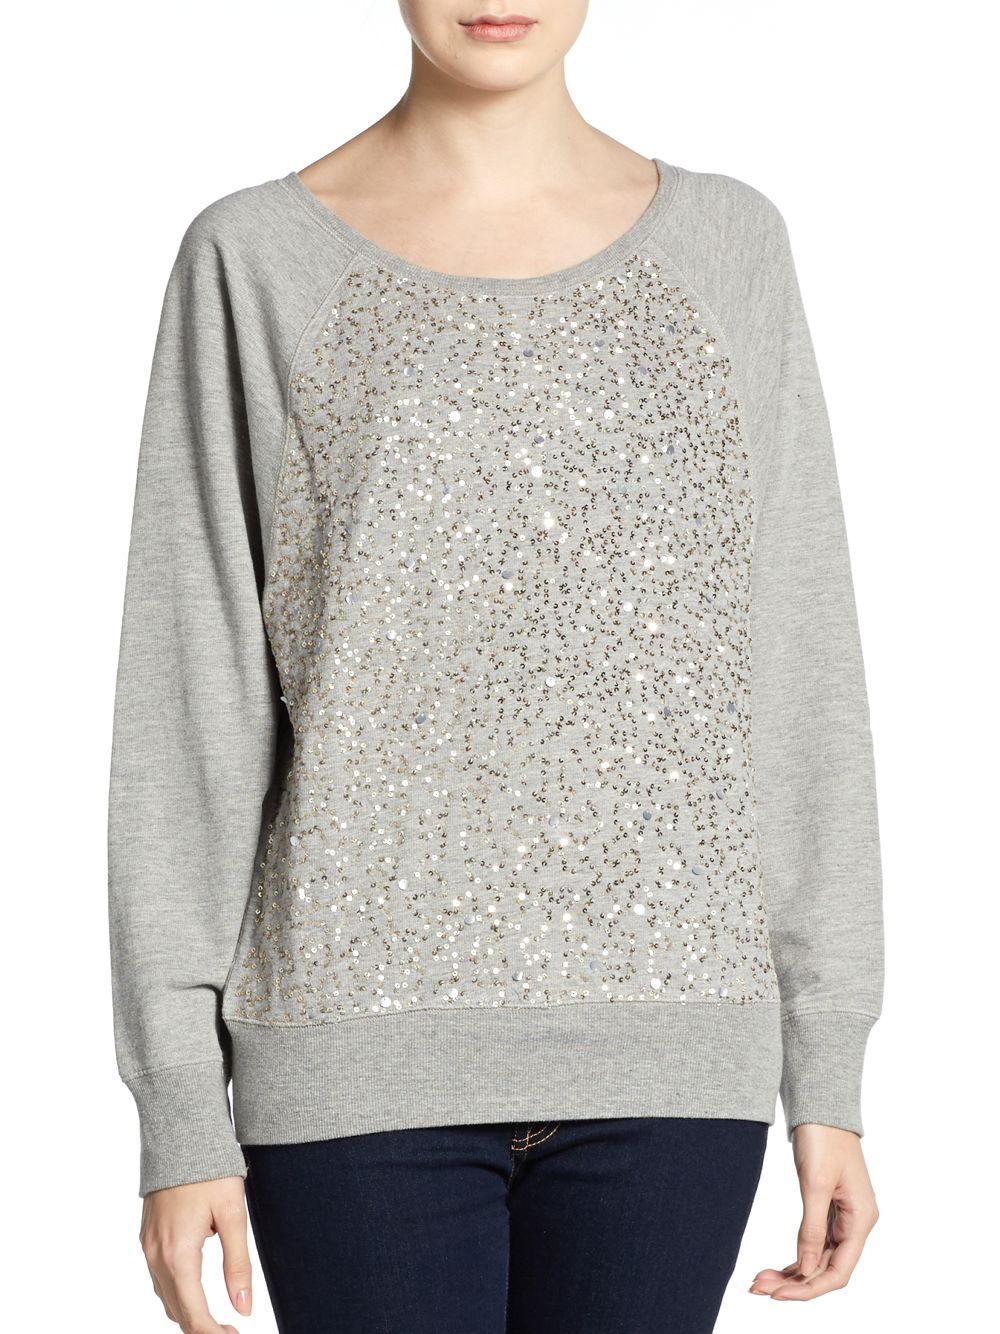 French Connection Ellen Sequin Sweatshirt in Gray (grey silver) | Lyst